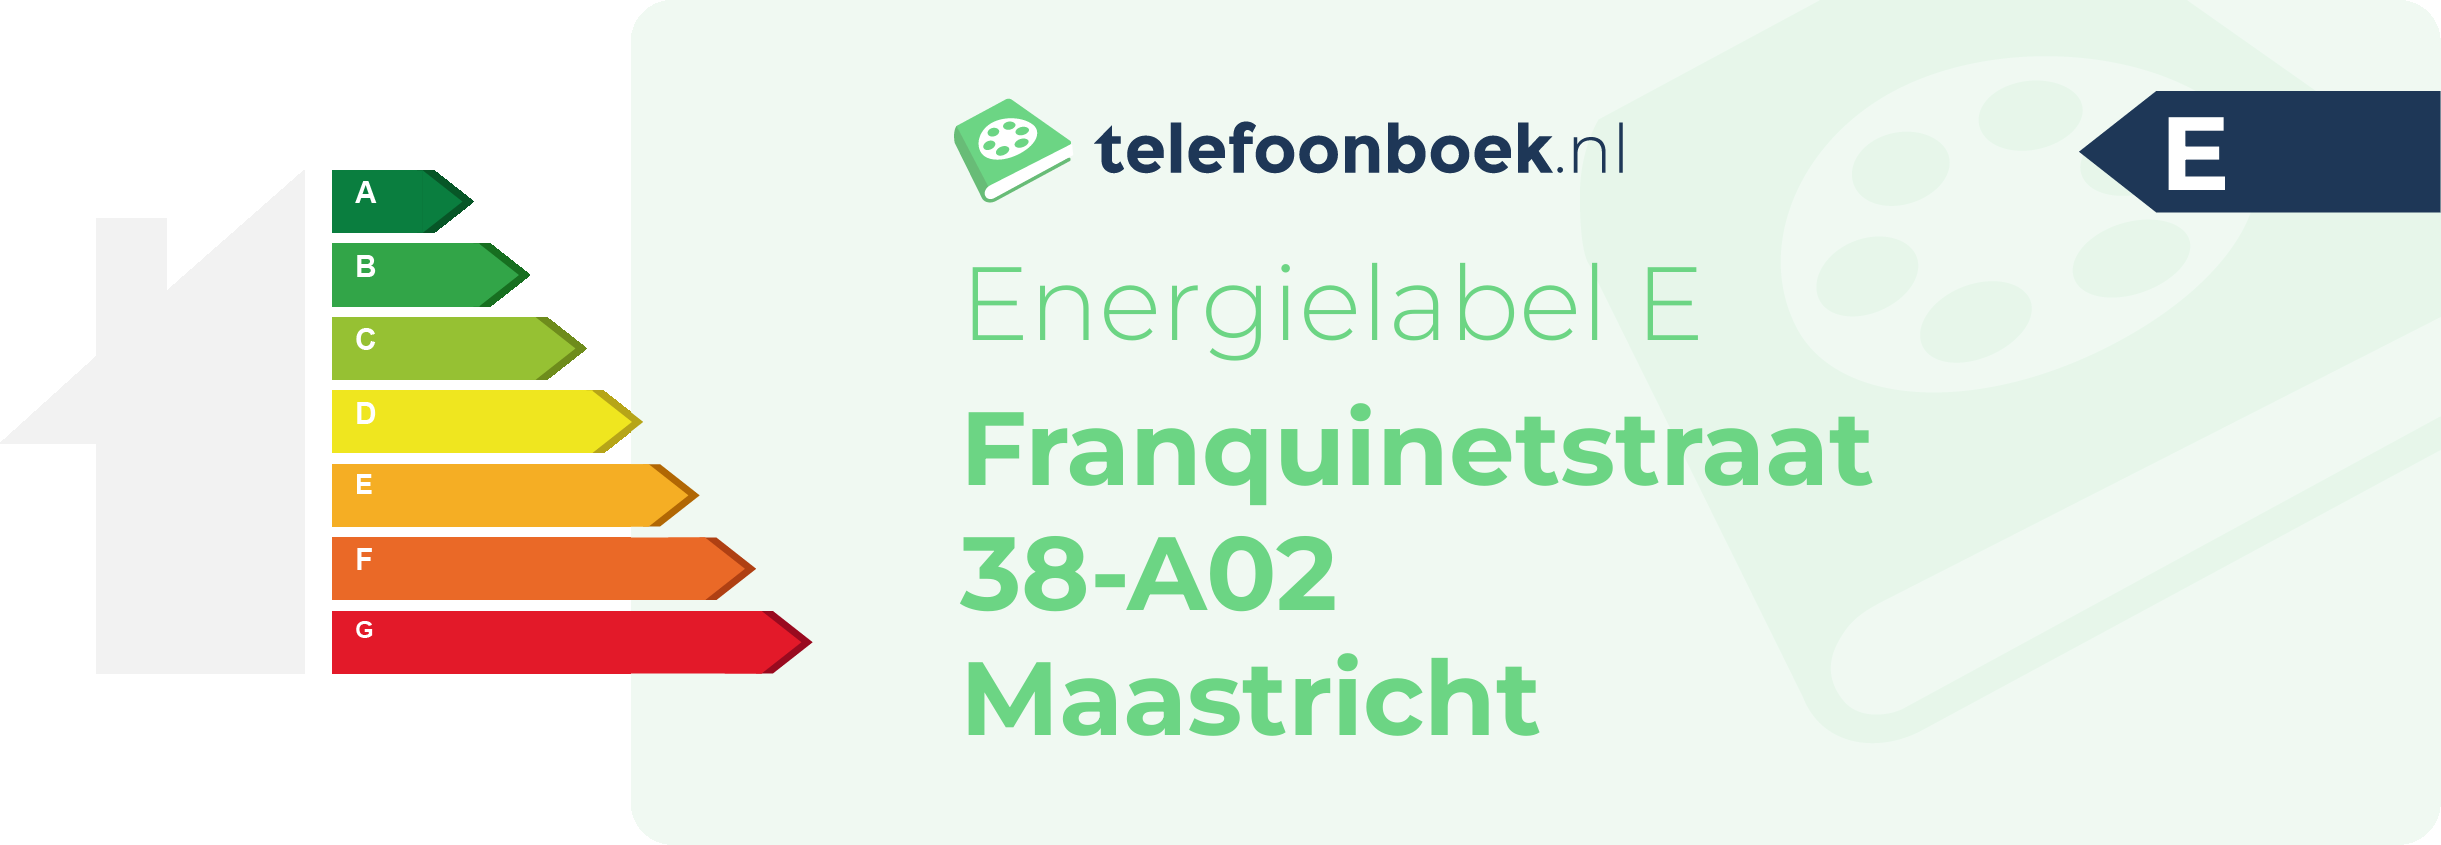 Energielabel Franquinetstraat 38-A02 Maastricht